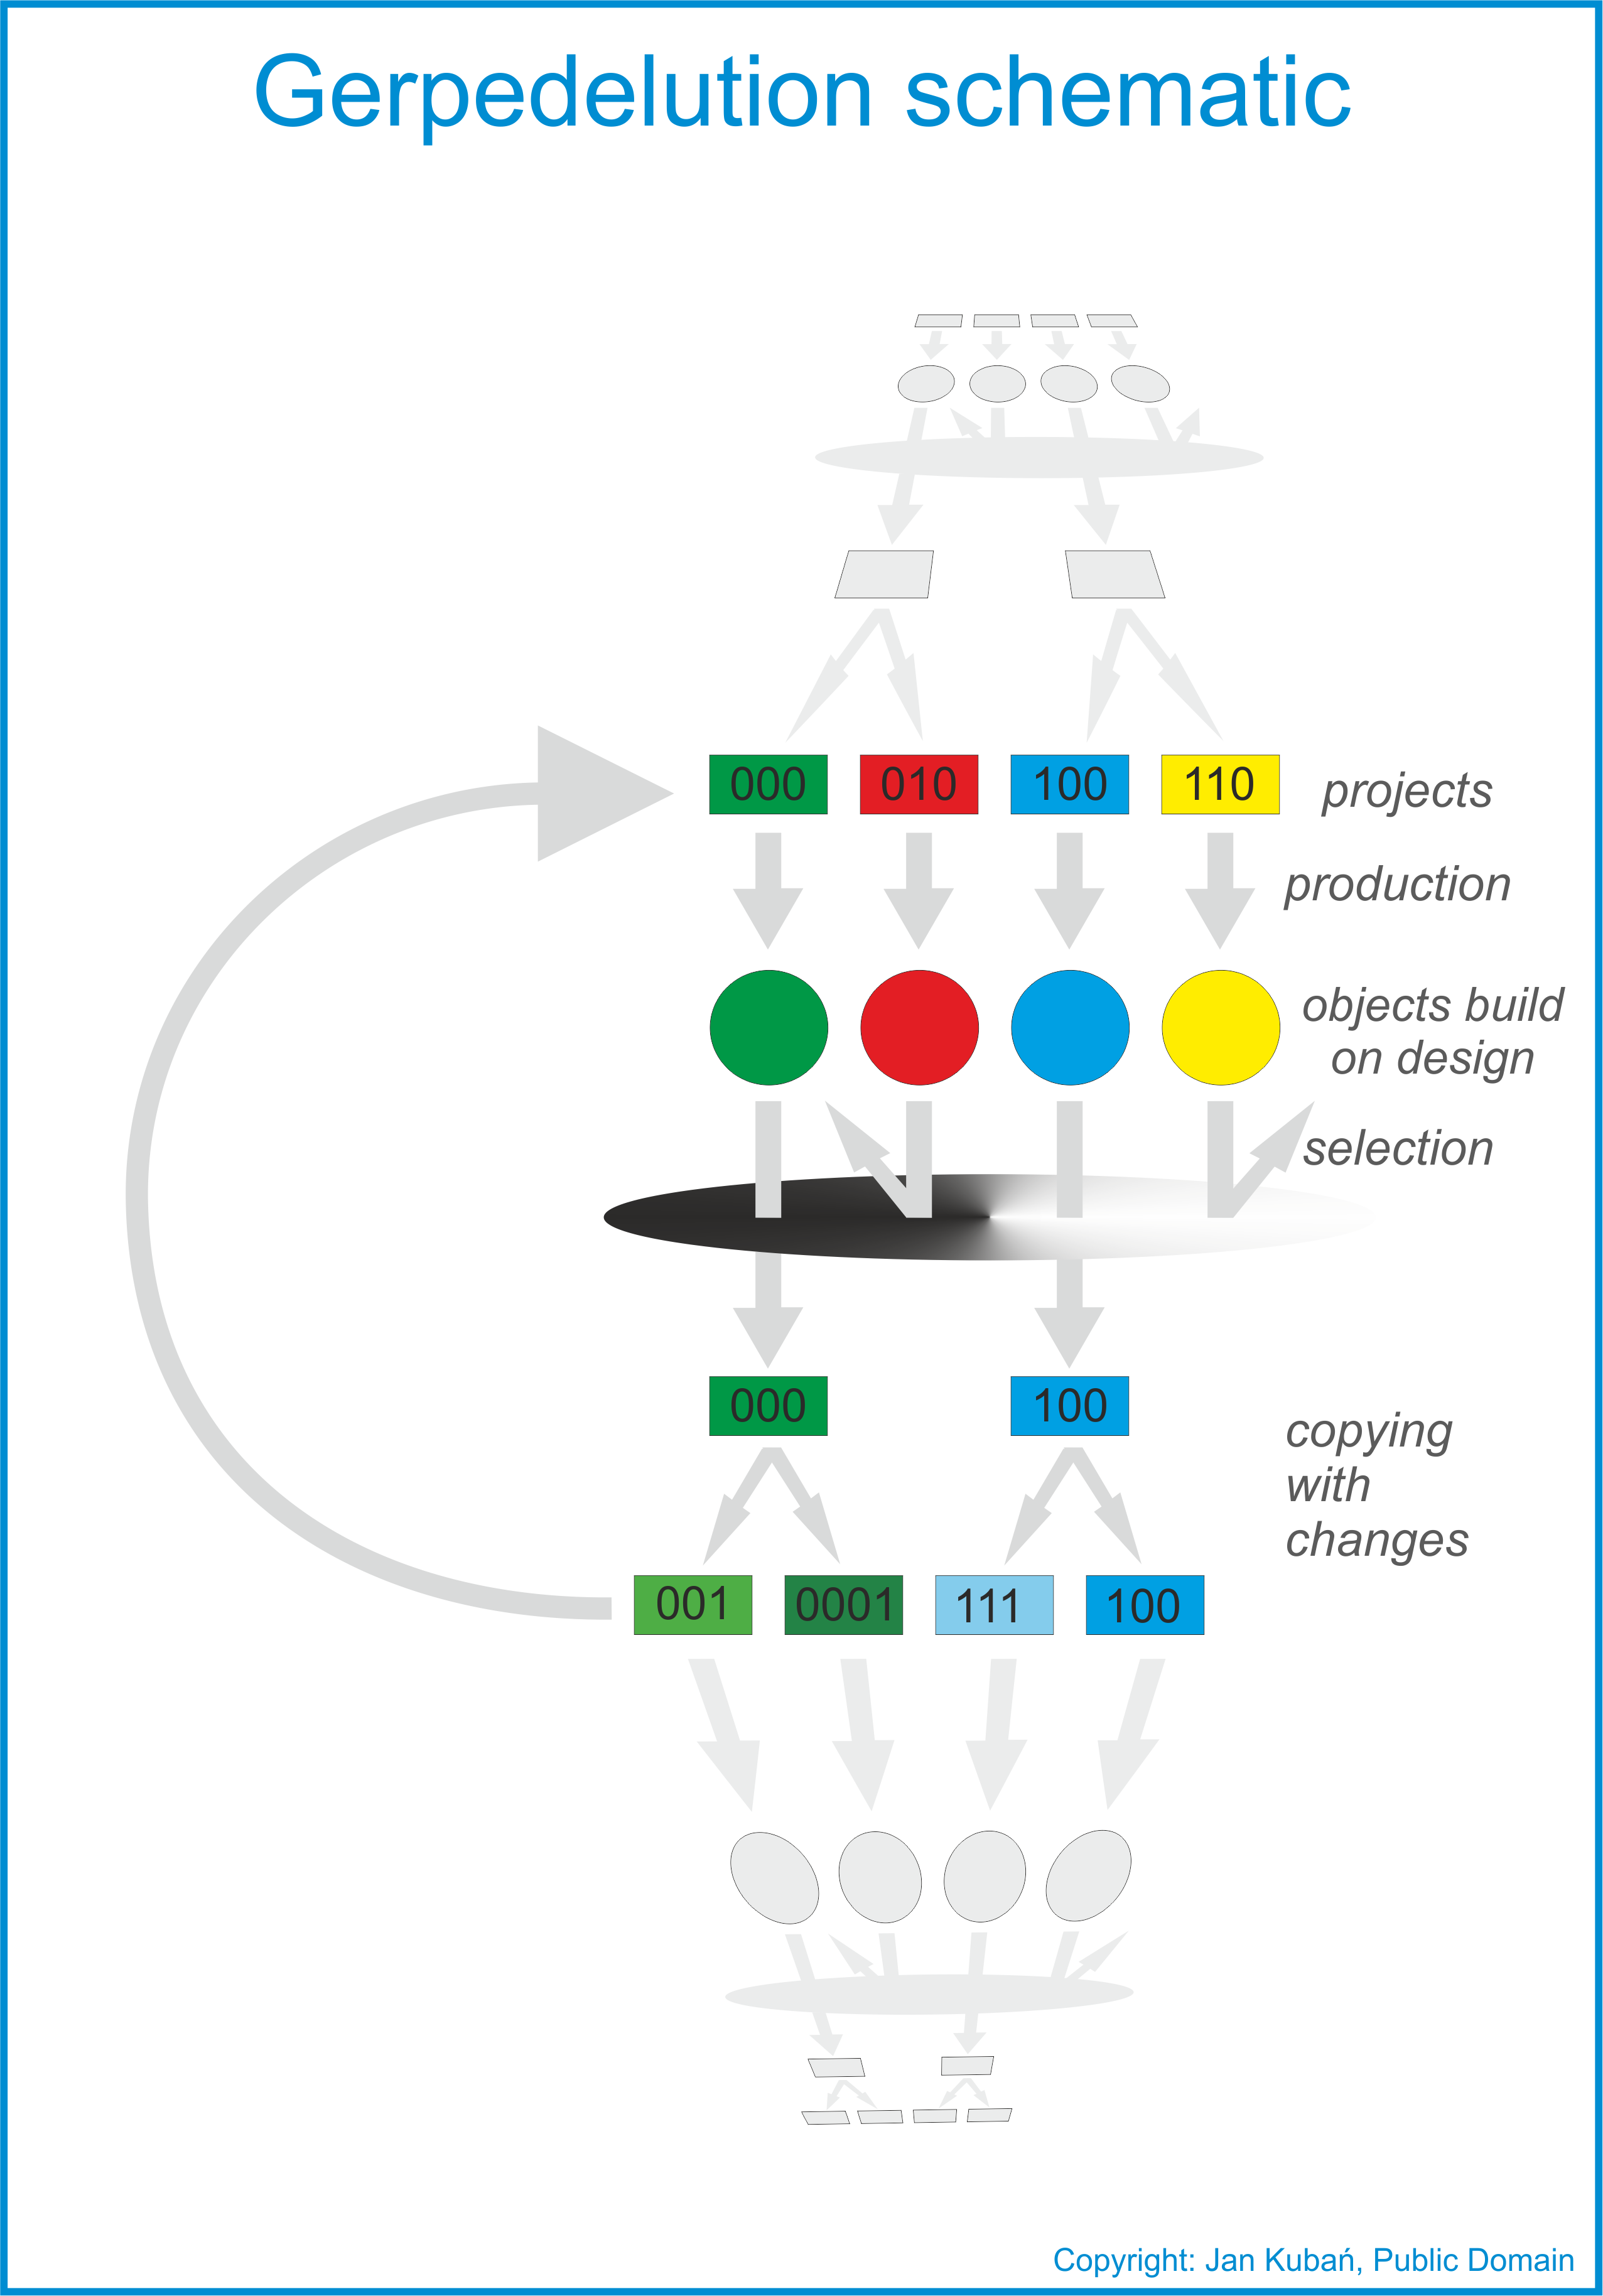 Schematic of gerpedelution